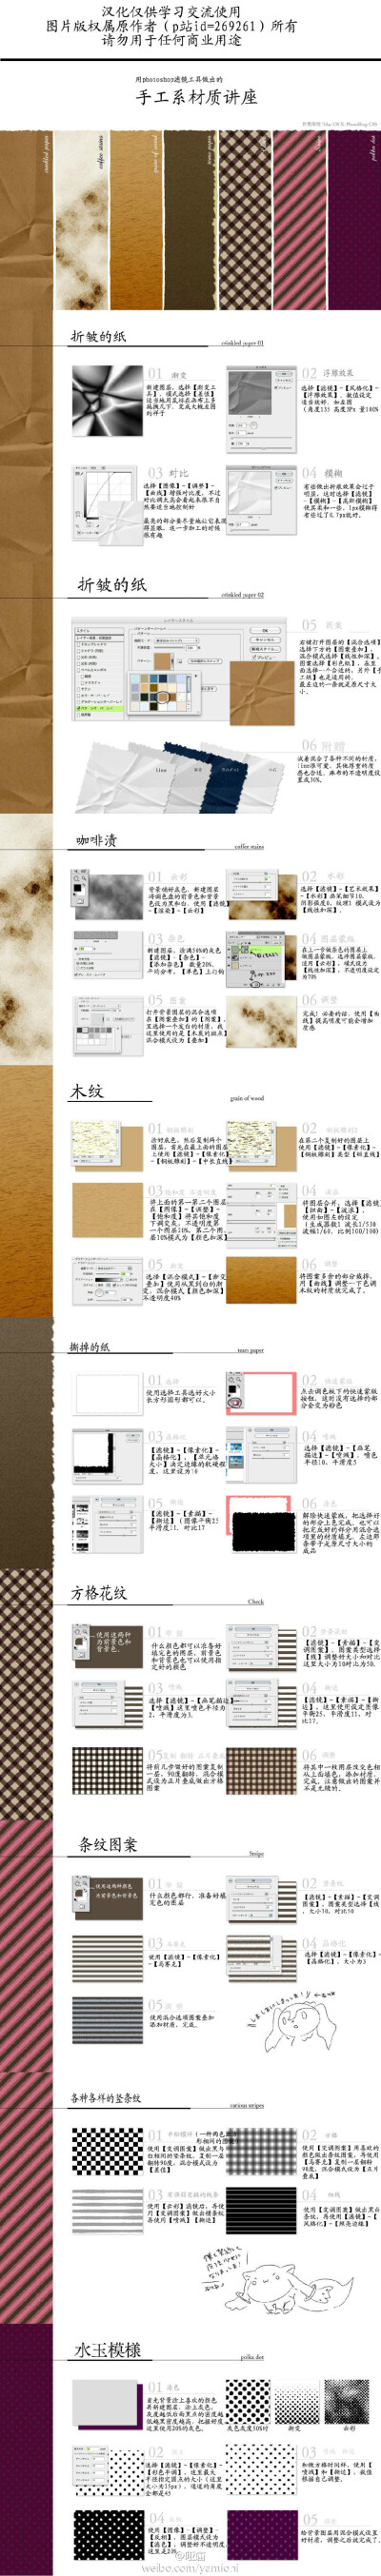 #p站讲座汉化#3分钟就能用ps滤镜做出的手工材质讲座，原地址http://t.cn/z8exyus